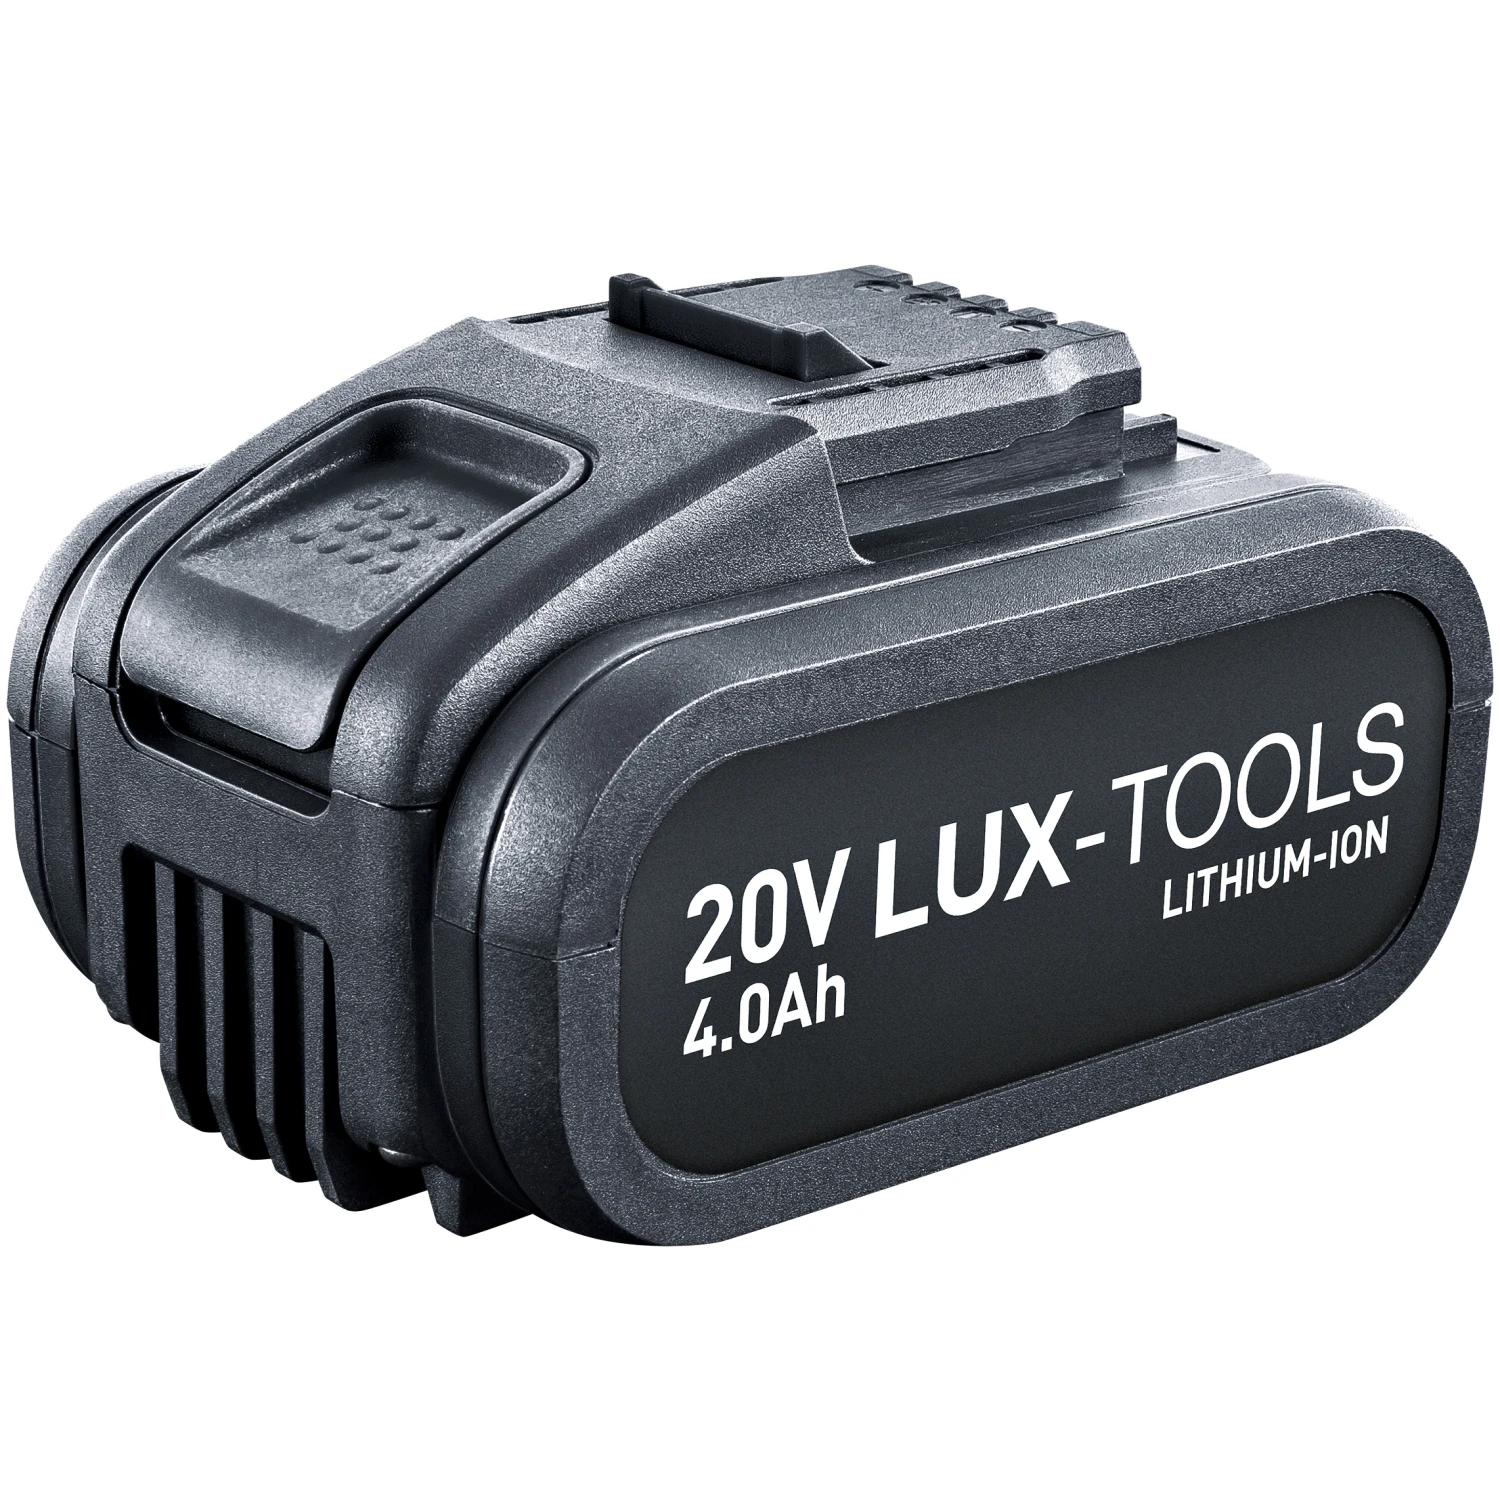 Lux tools аккумуляторная. Lux Tools аккумуляторный инструмент 20v. Аккумулятор Lux-Tools 20v 4ah. Wa3553 аккумулятор. Lux Tools шуруповерт 20 v/2.0Ah.